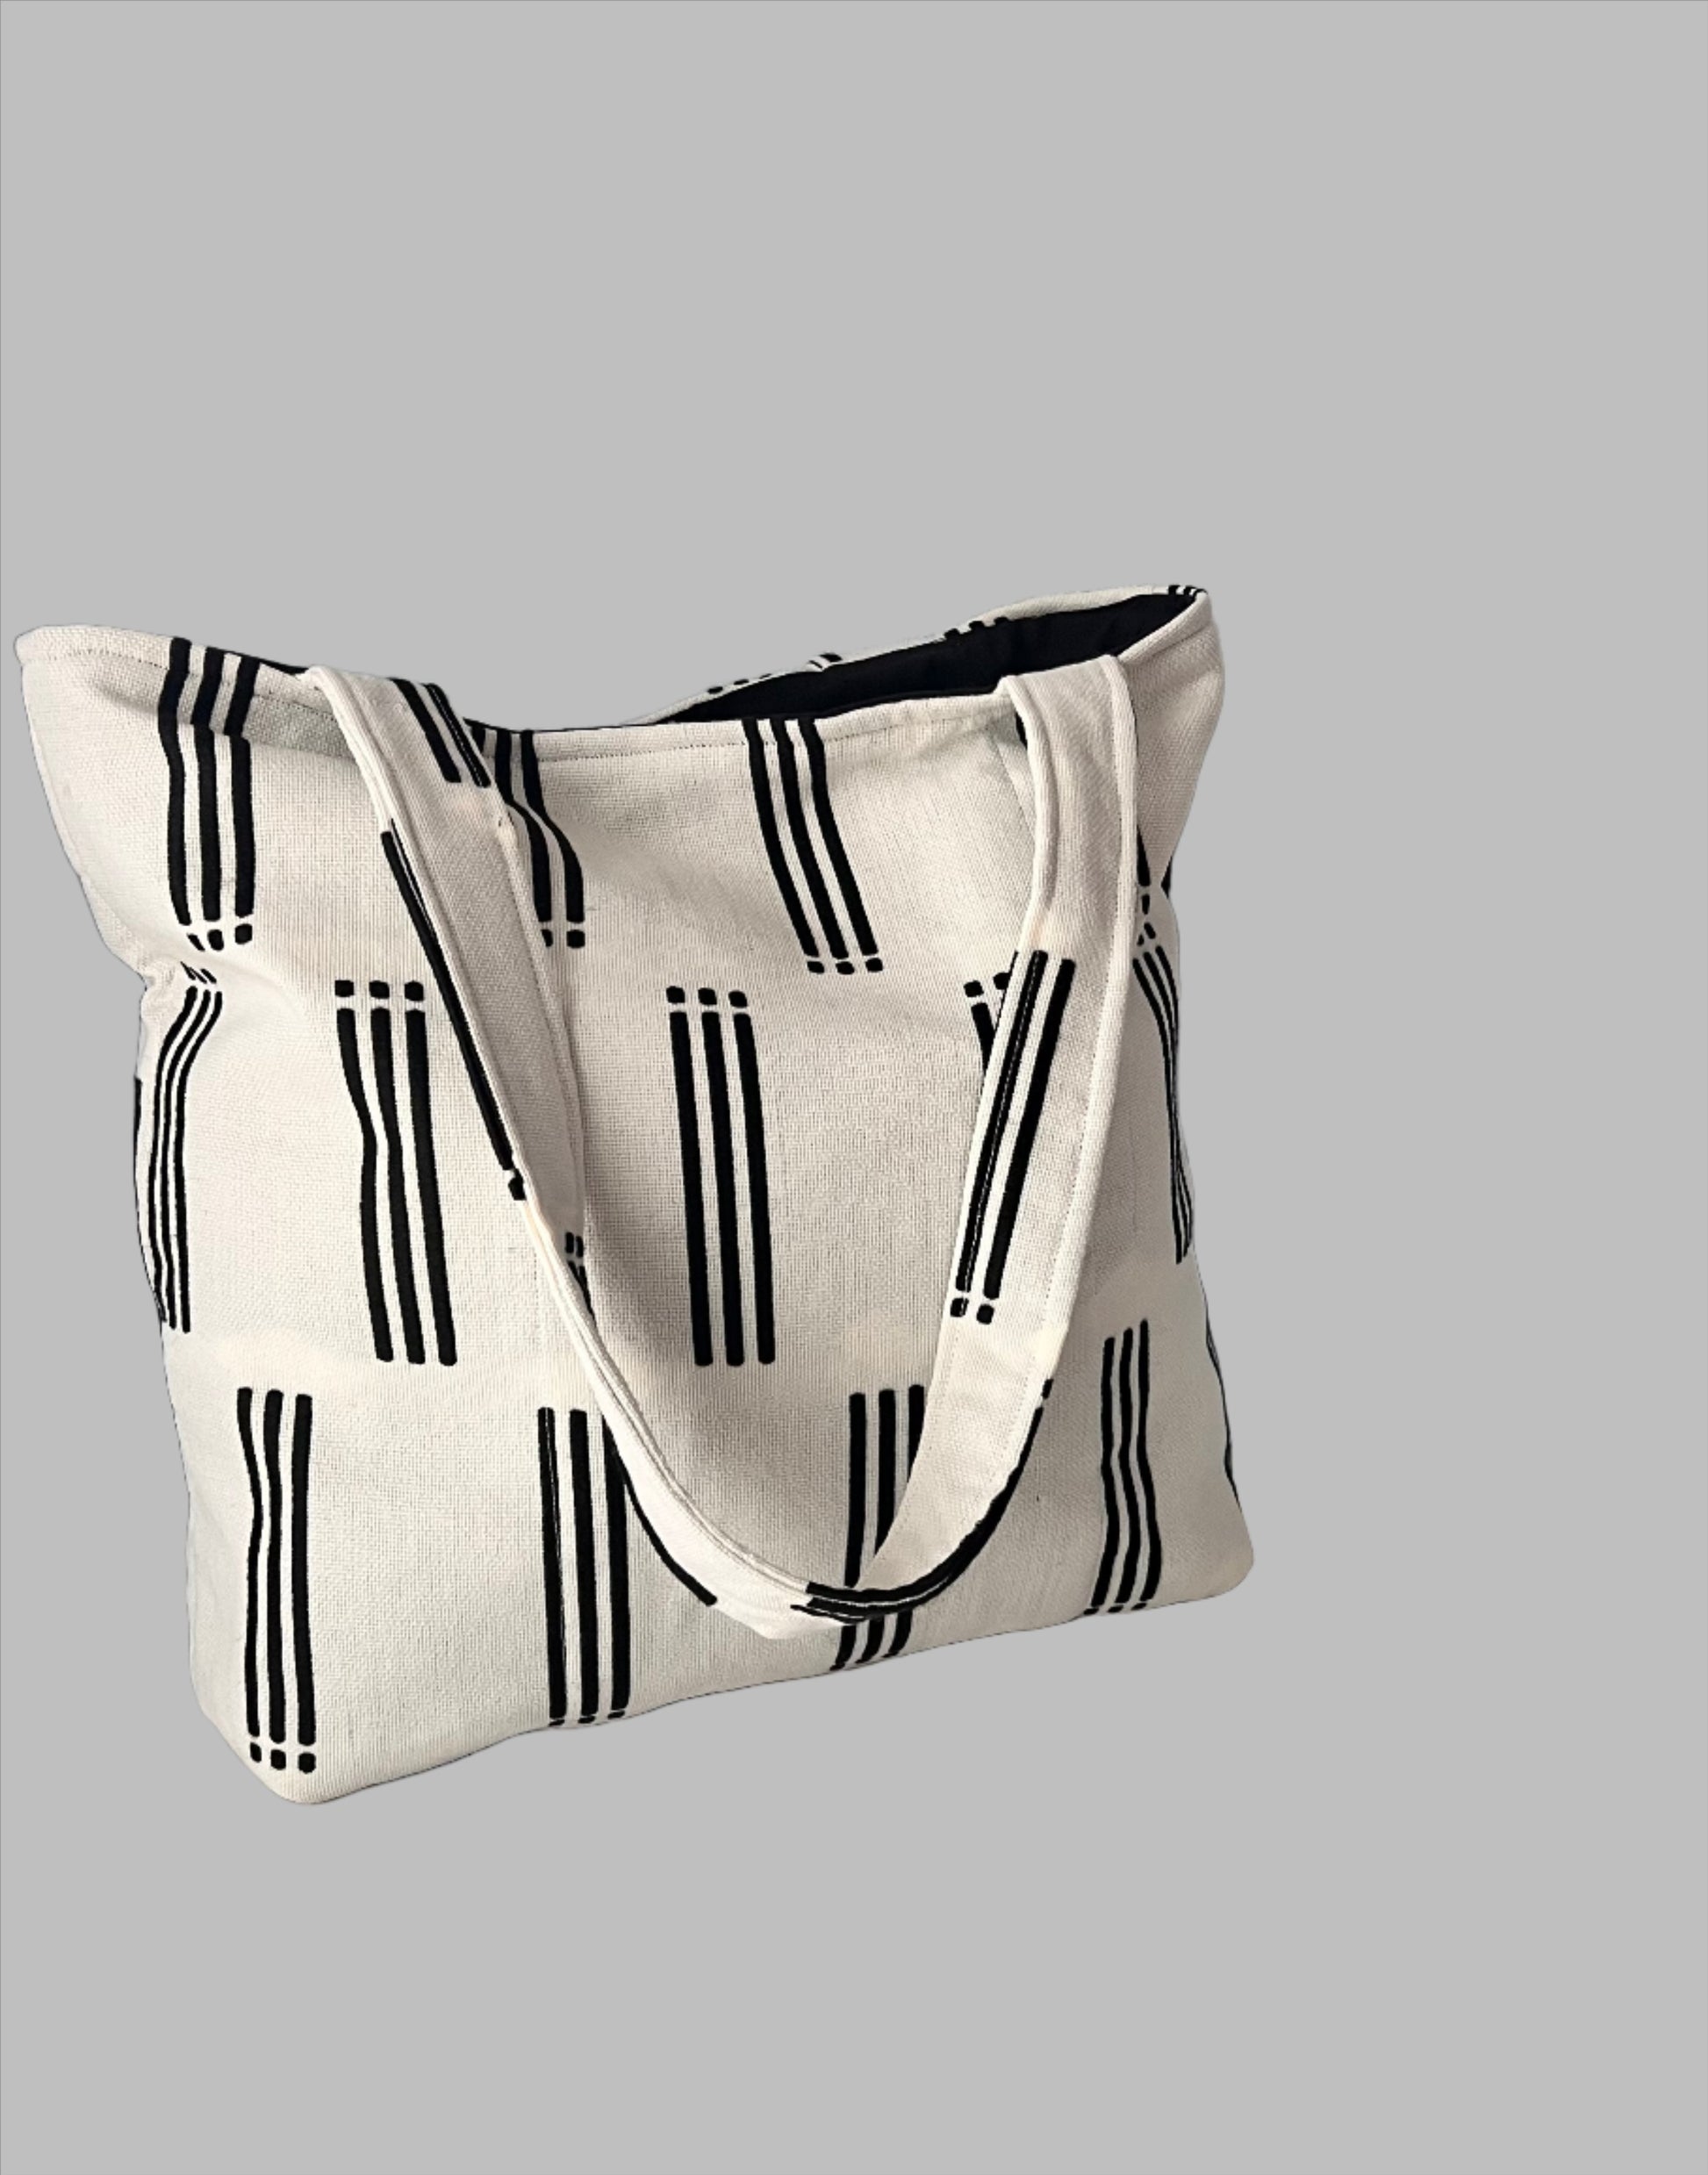 Black and White Handmade Tote Bag